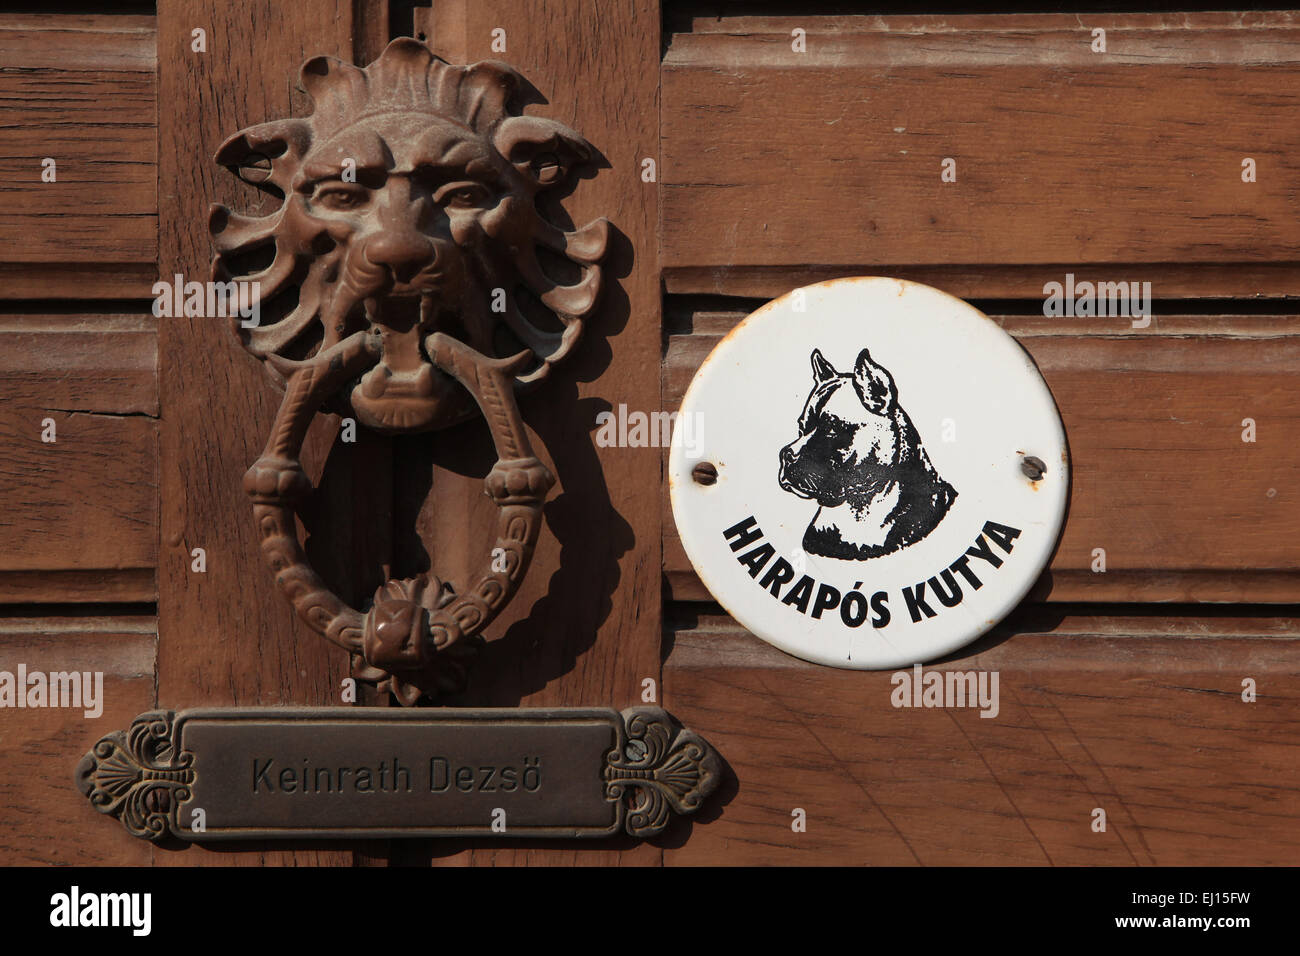 Harapos Kutya! Beware of the Dog! Warning sign and knocker at the door in Mohacs, Hungary. Stock Photo